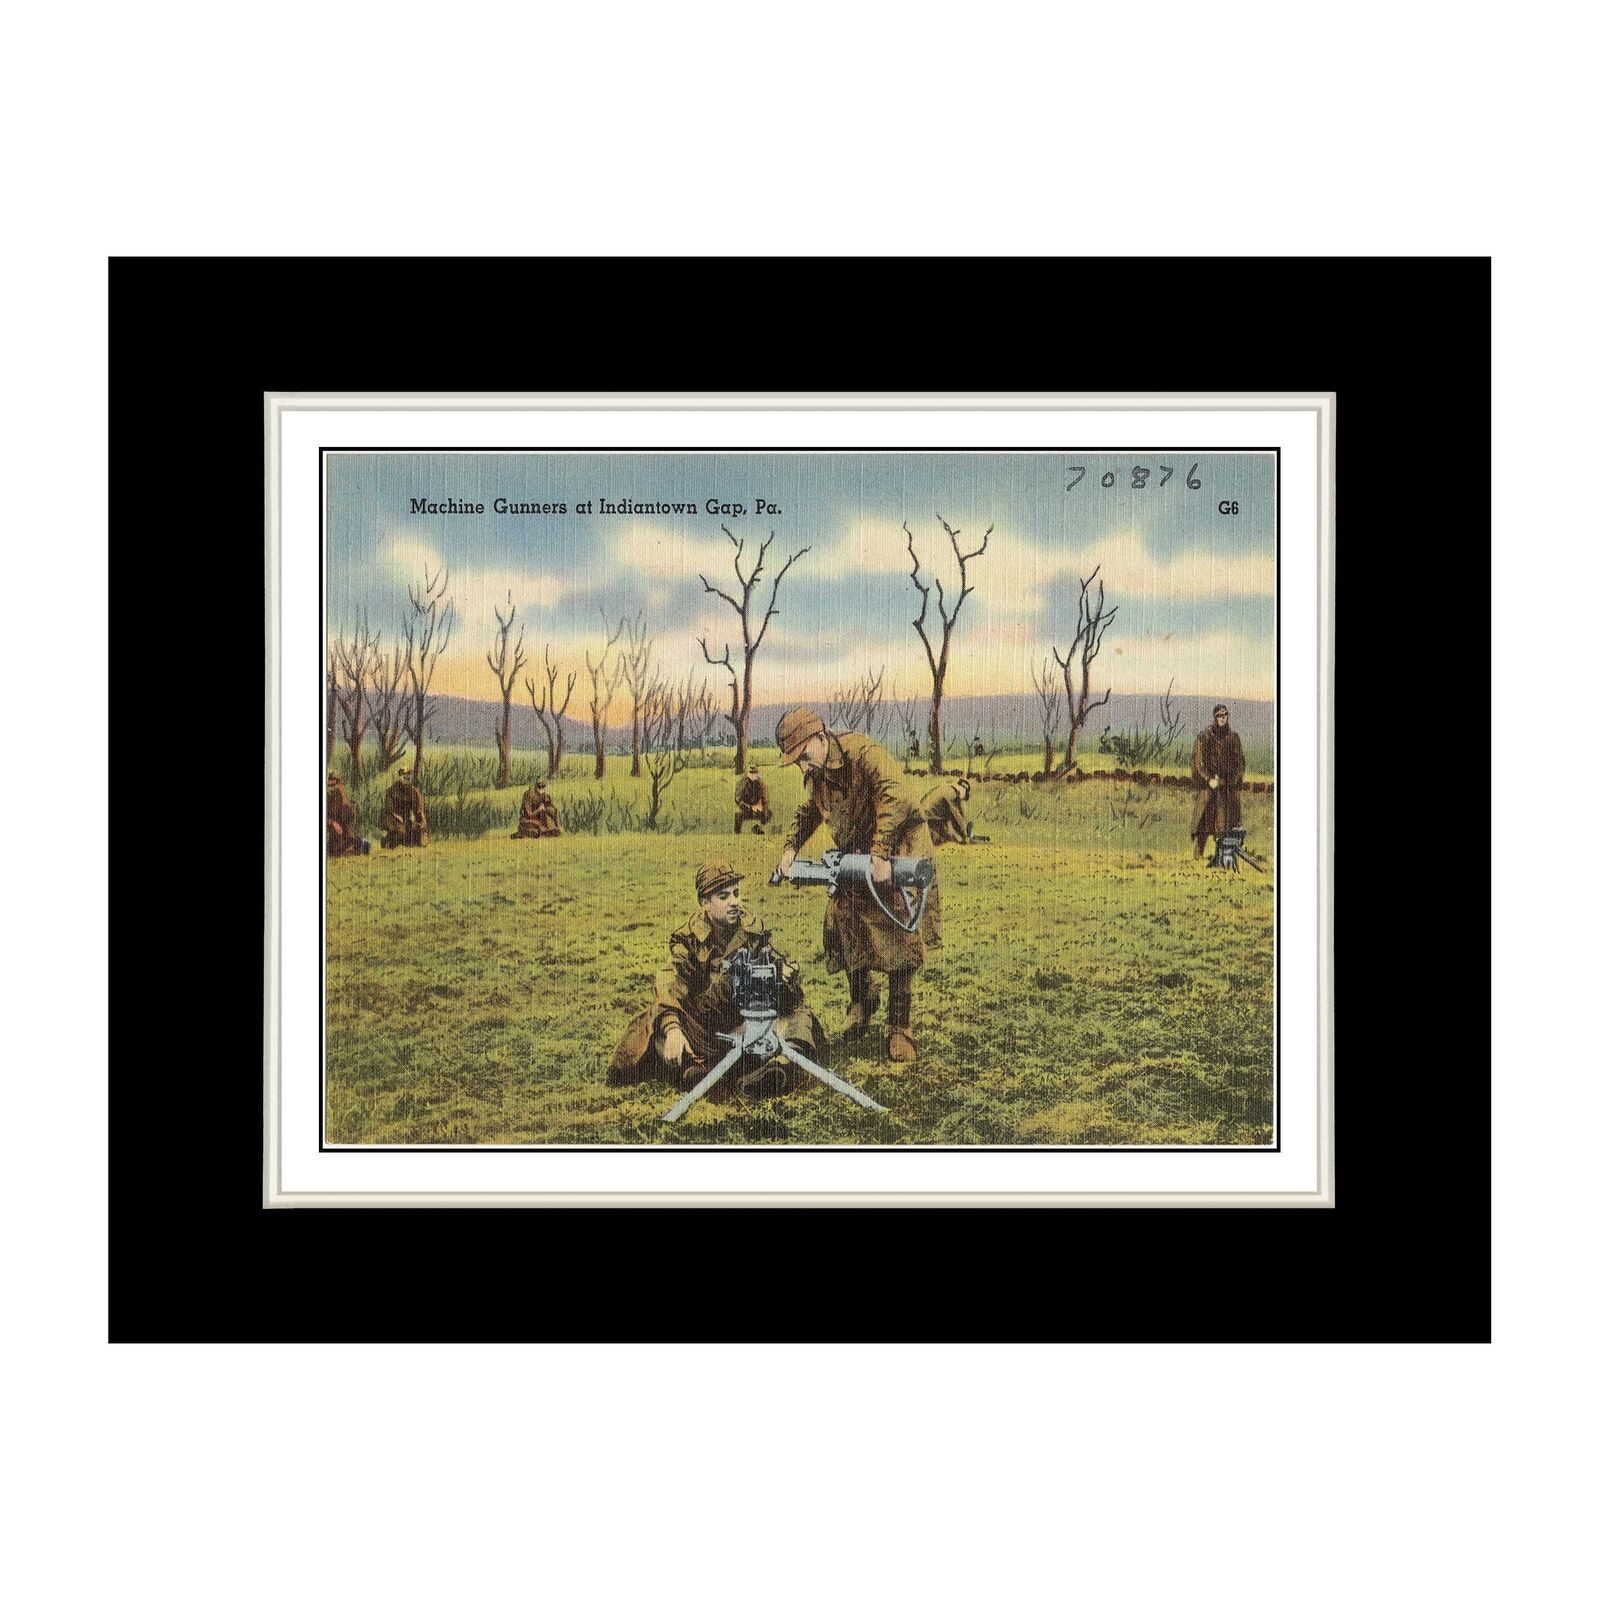 Art Print - Pennsylvania Postcard - Machine gunners at Indiantown Gap, Pa.